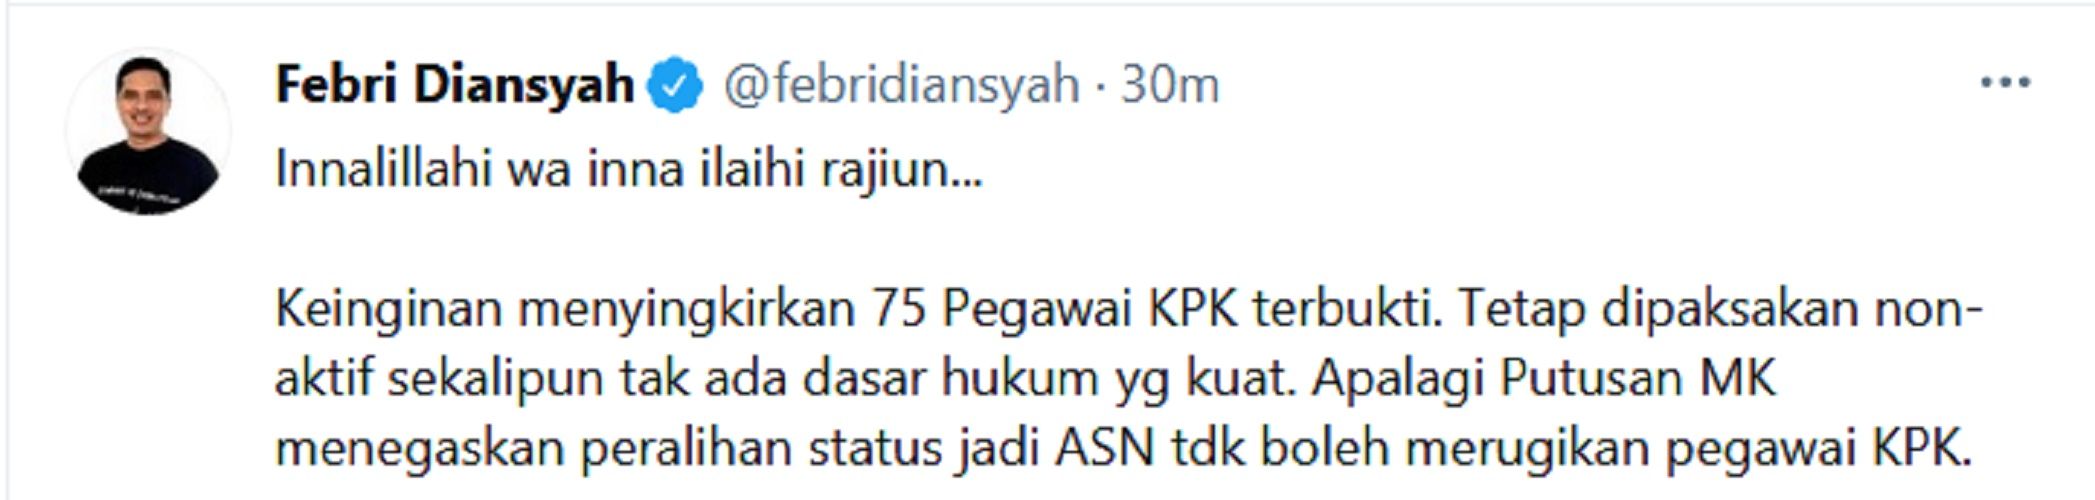  Mantan Jubir Komisi Pemberantasan Korupsi (KPK), Febri Diansyah mengomentari soal dinonaktifkannya 75 pegawai KPK.